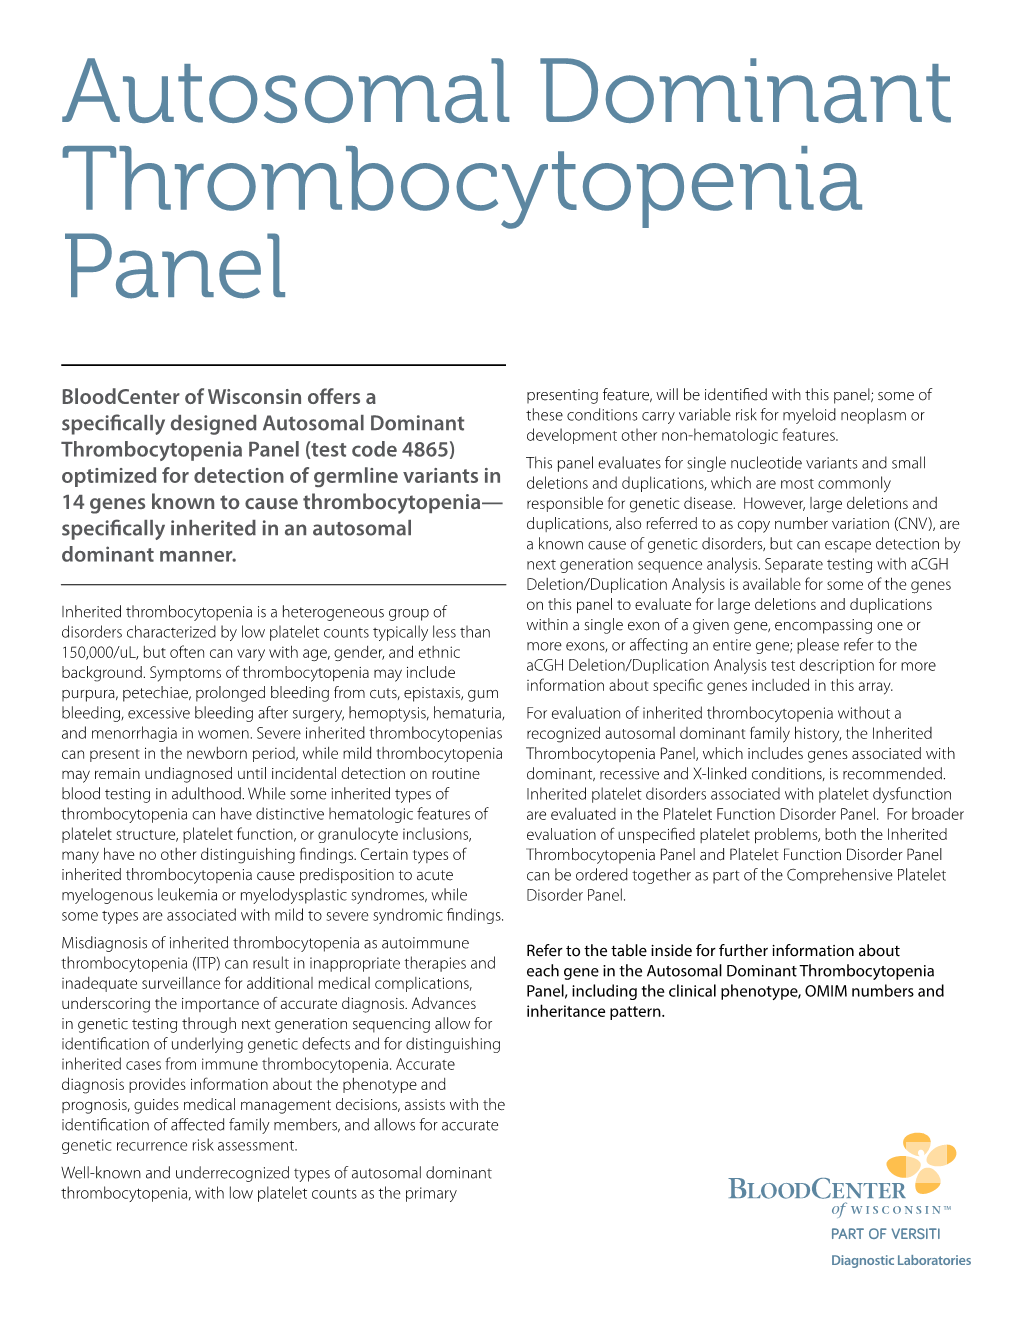 Autosomal Dominant Thrombocytopenia Panel: Gene, Clinical Phenotype, OMIM Number and Inheritance Pattern